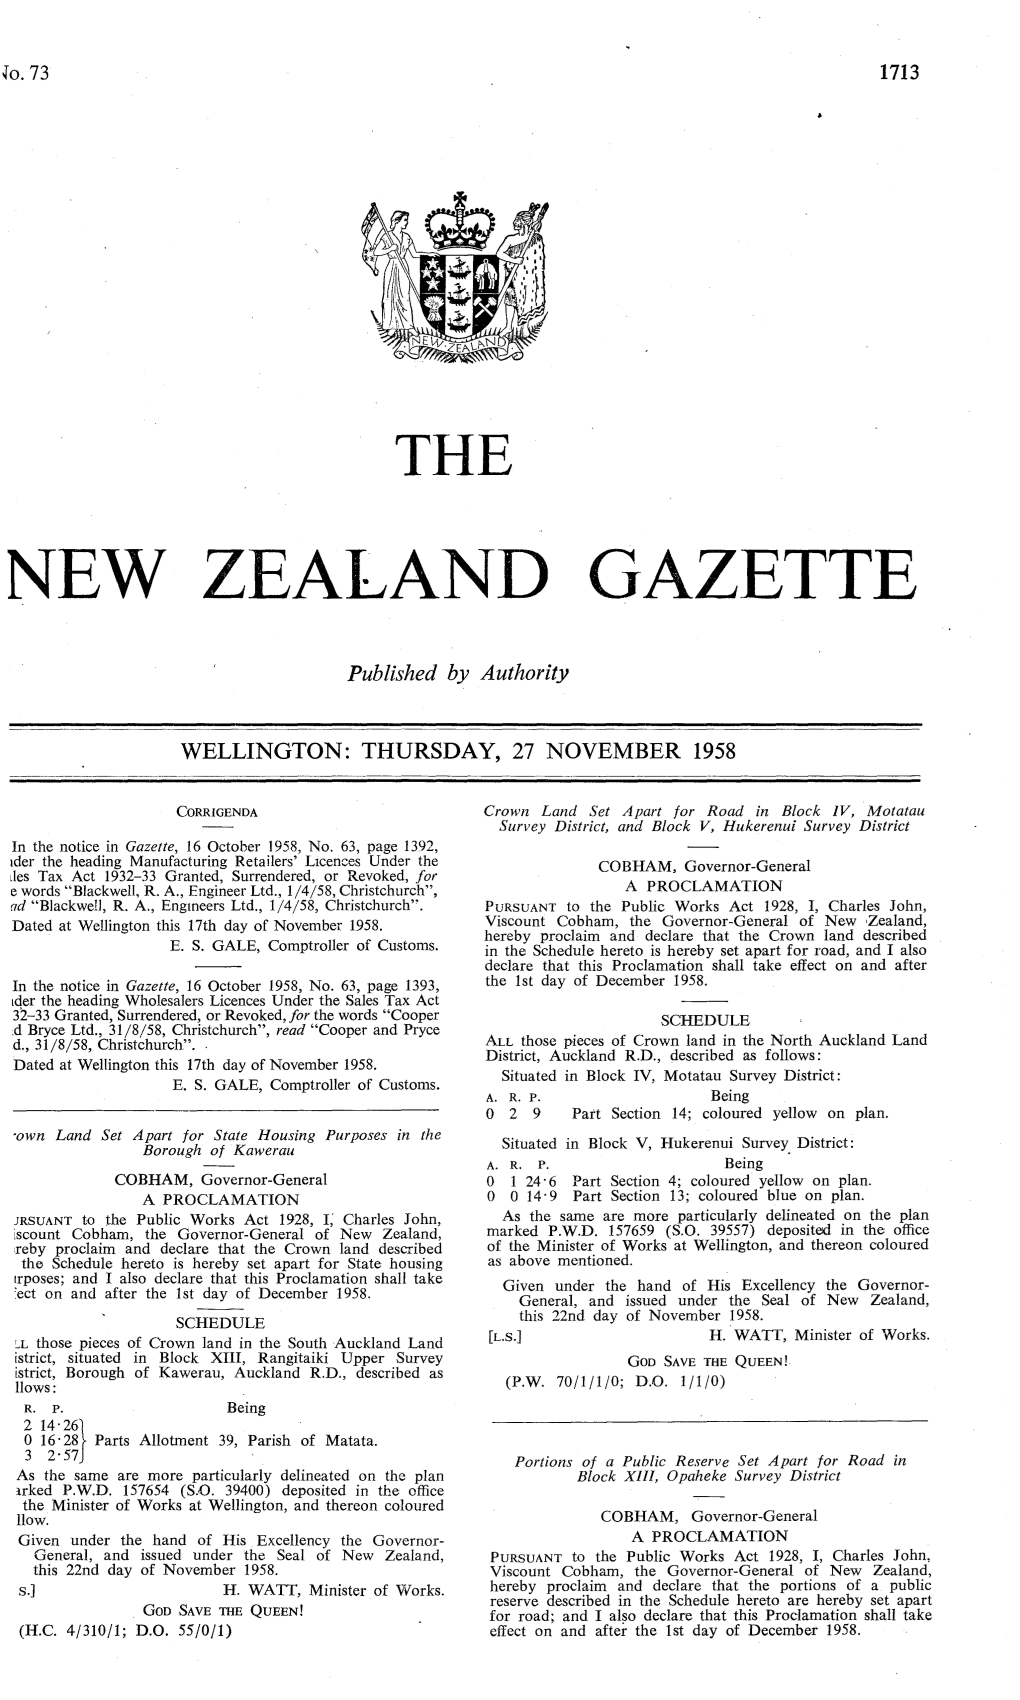 No 73, 27 November 1958, 1713